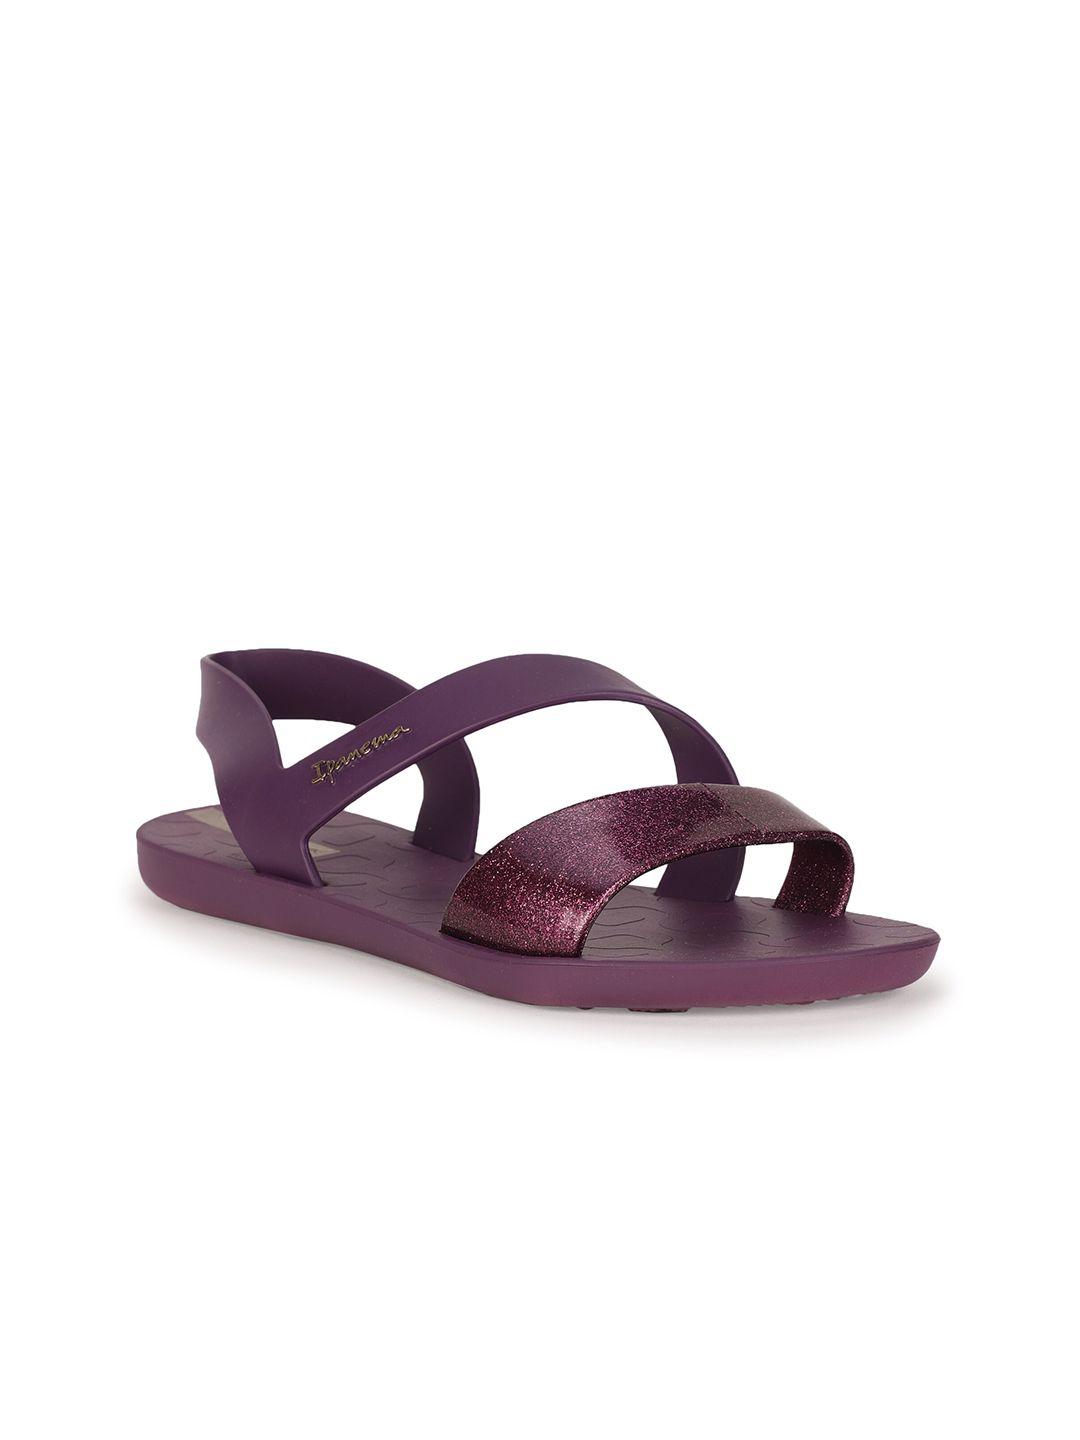 ipanema women purple open toe flats